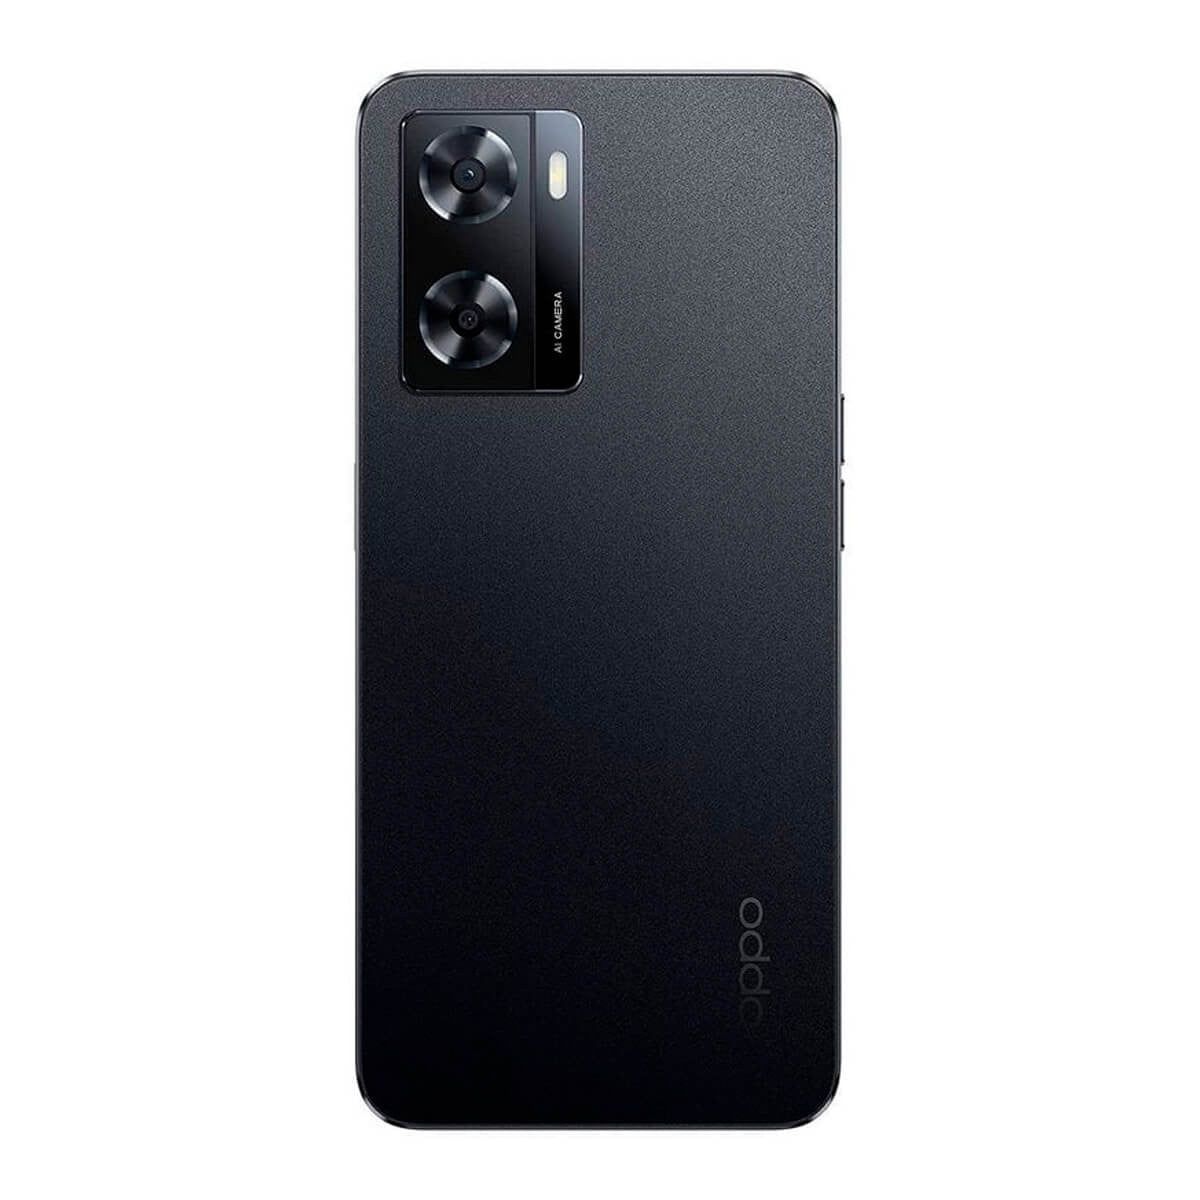 OPPO A57 4GB/64GB Negro (Glowing Black) Dual SIM CPH2387 Smartphone | Oppo